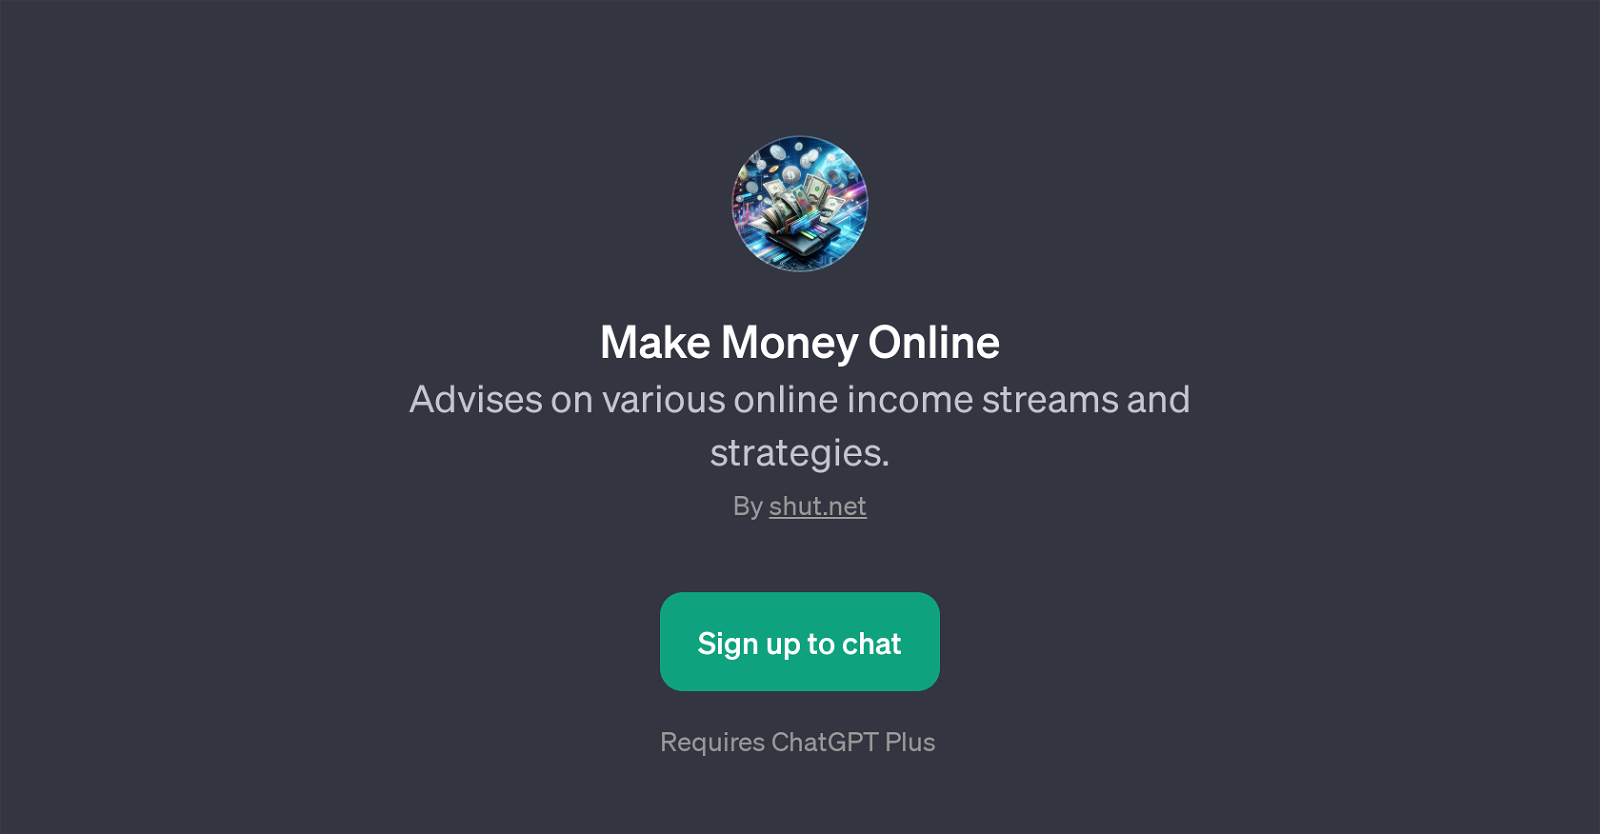 Make Money Online website